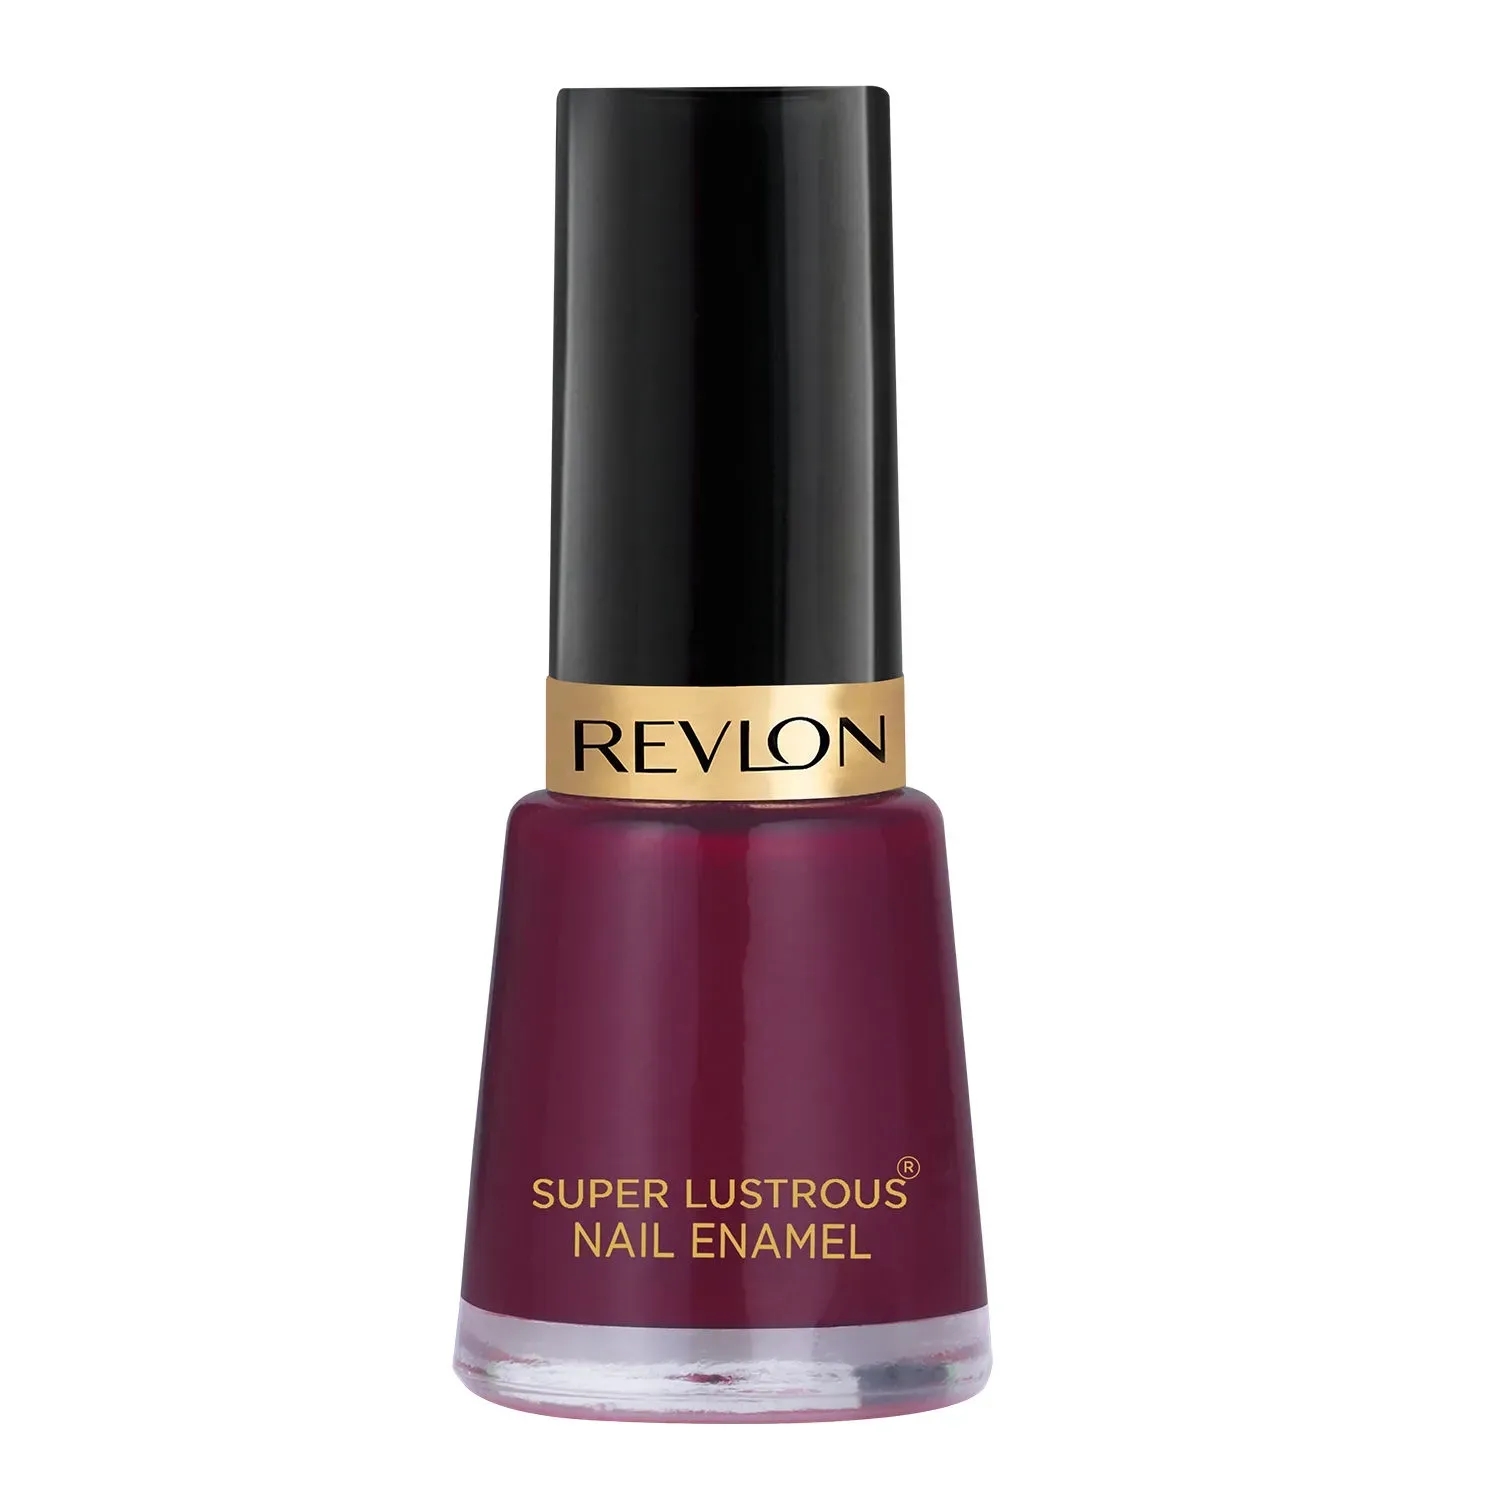 Revlon | Revlon Super Lustrous Nail Enamel - Bewitching (8ml)